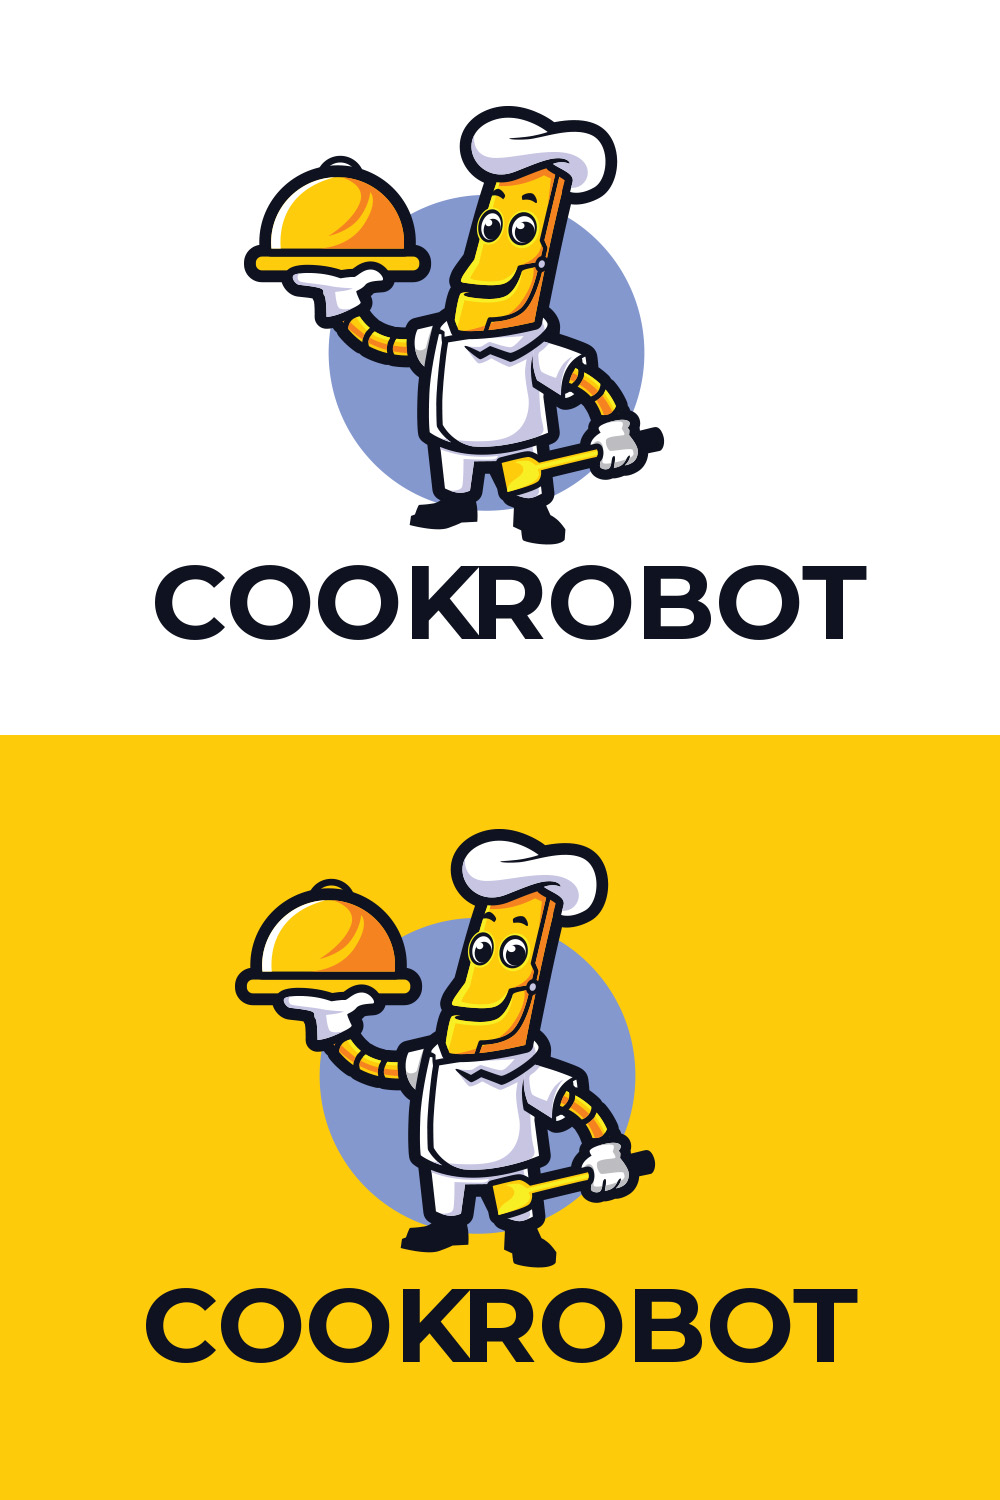 Chef Robot Mascot Logo Design pinterest preview image.